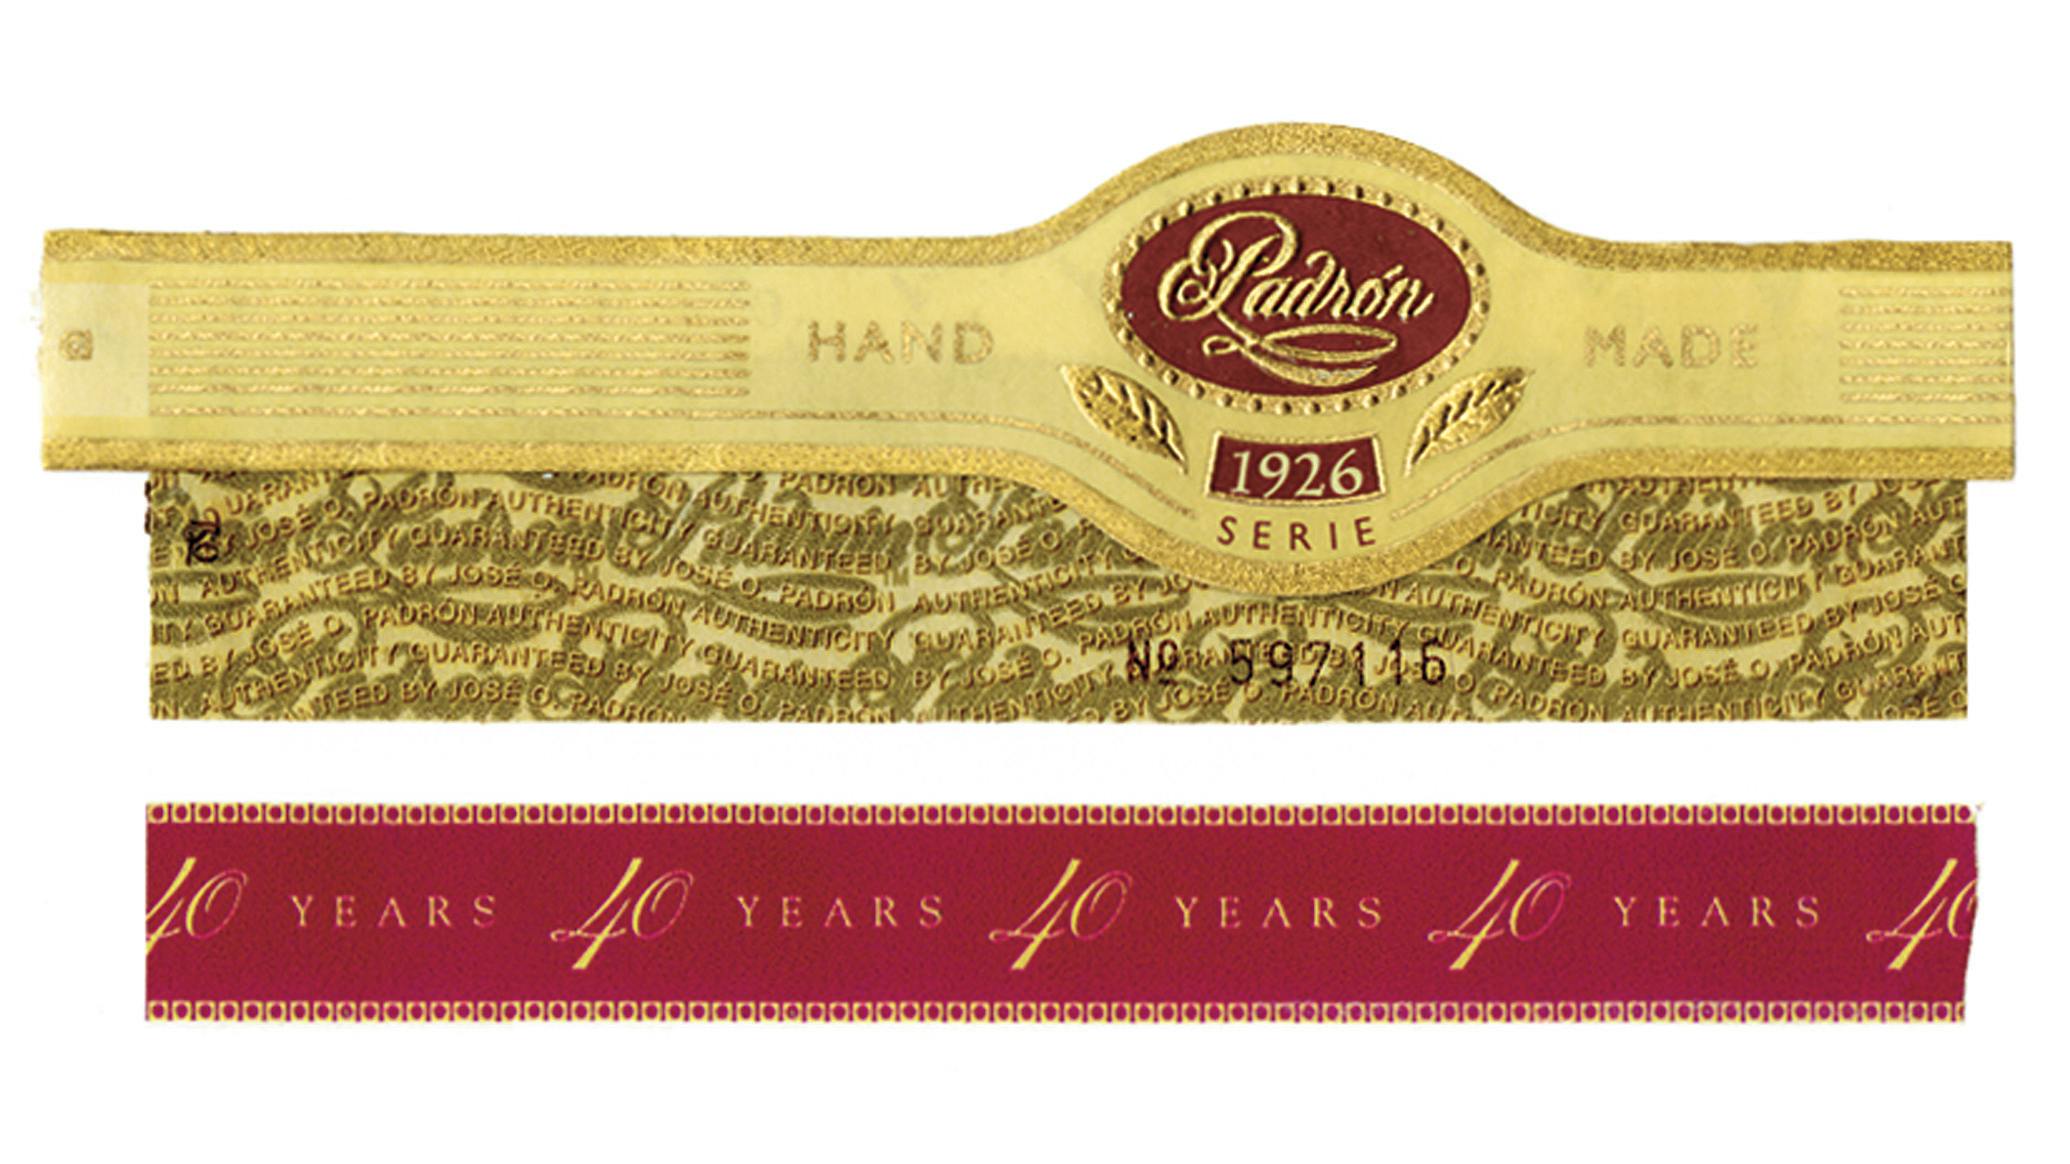 Padrón Serie 1926 40th Anniversary (2014)